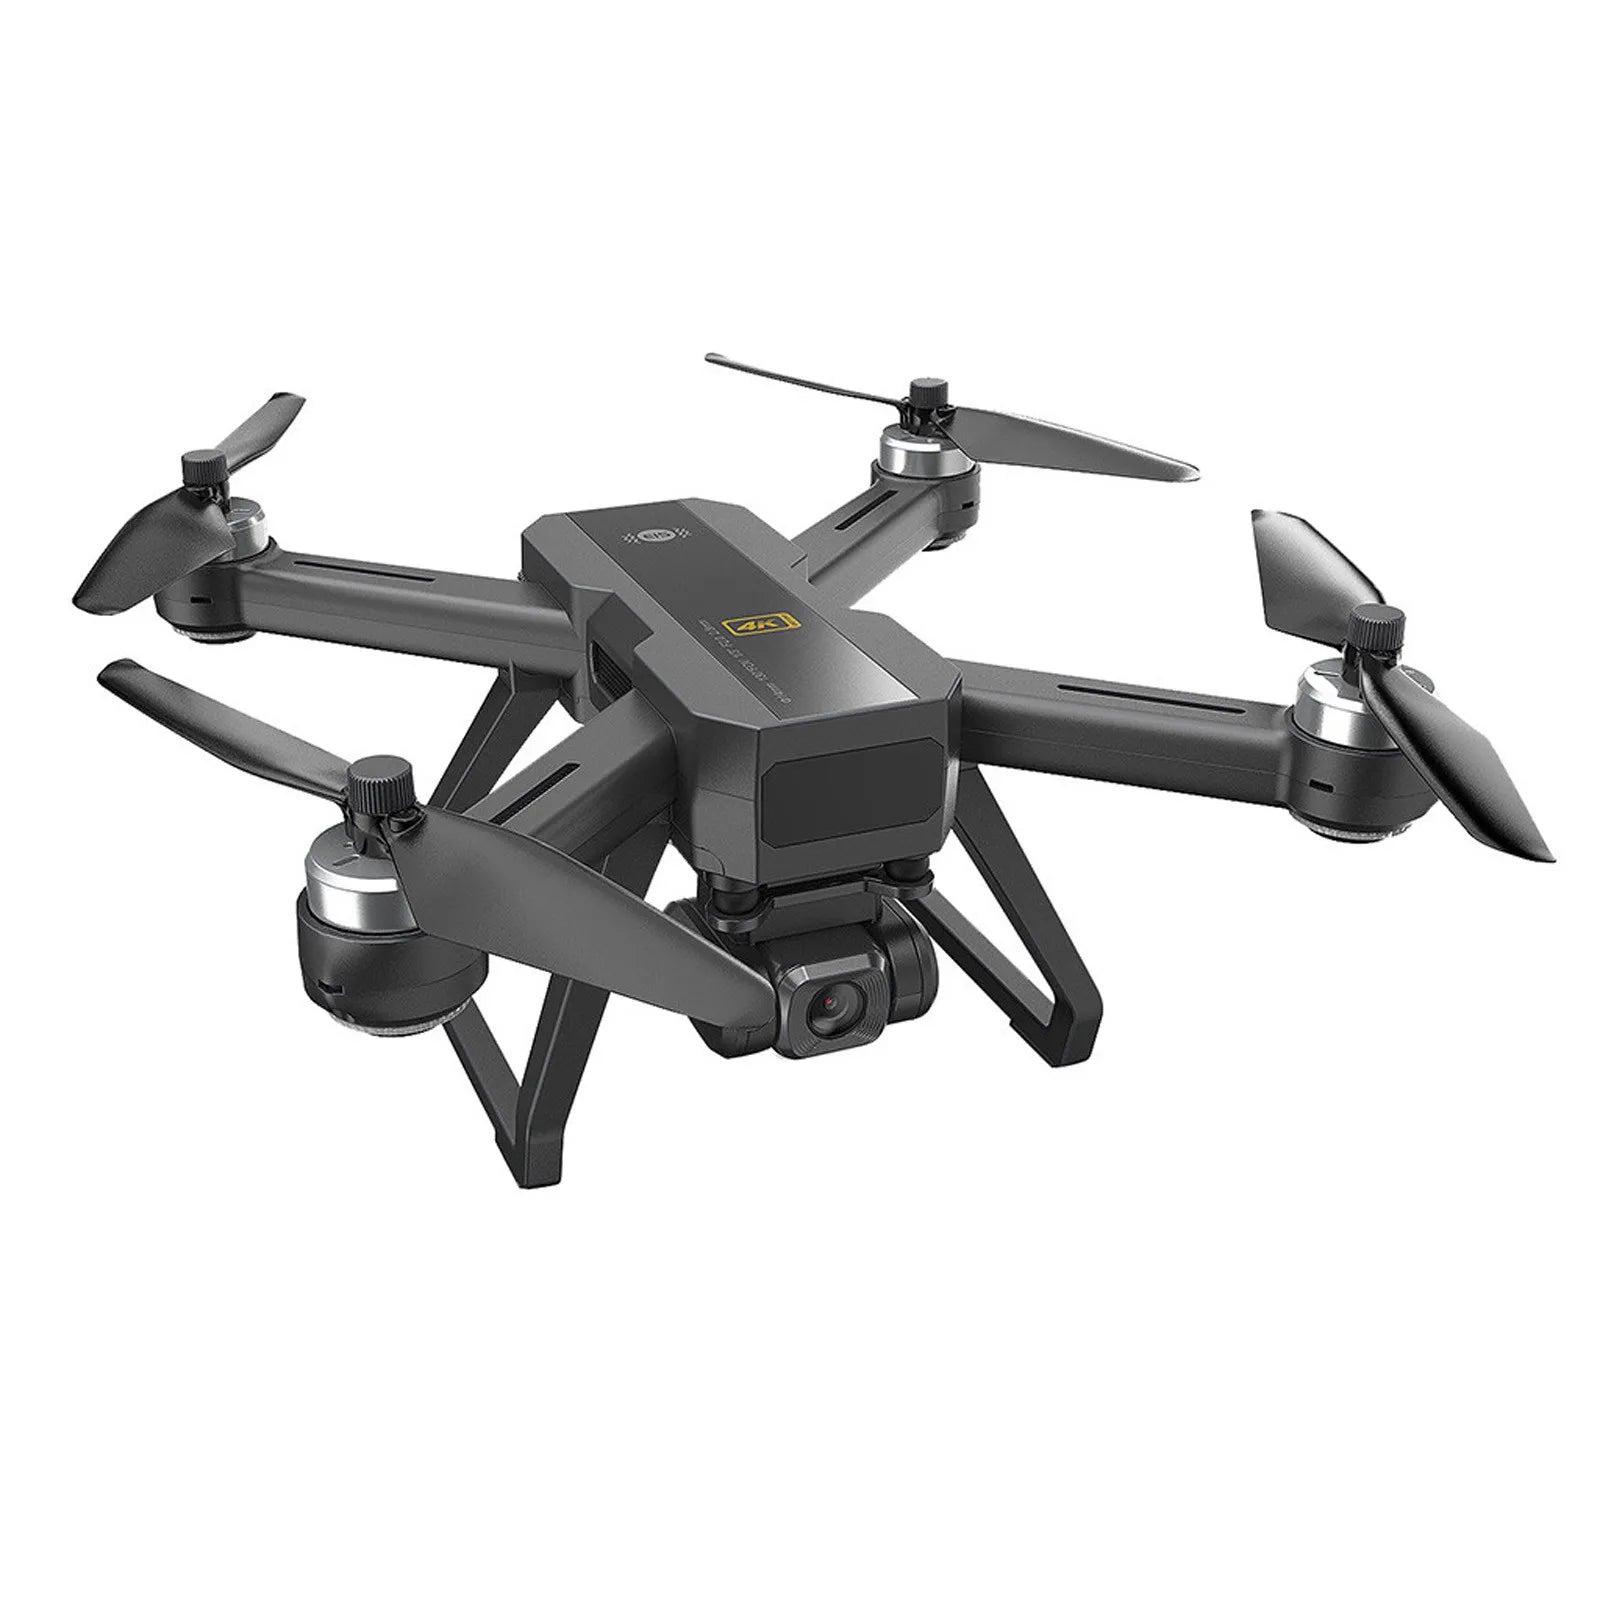 Mjx Bugs 20 Drone - Electronic Anti-shake Gimbal GPS Dr